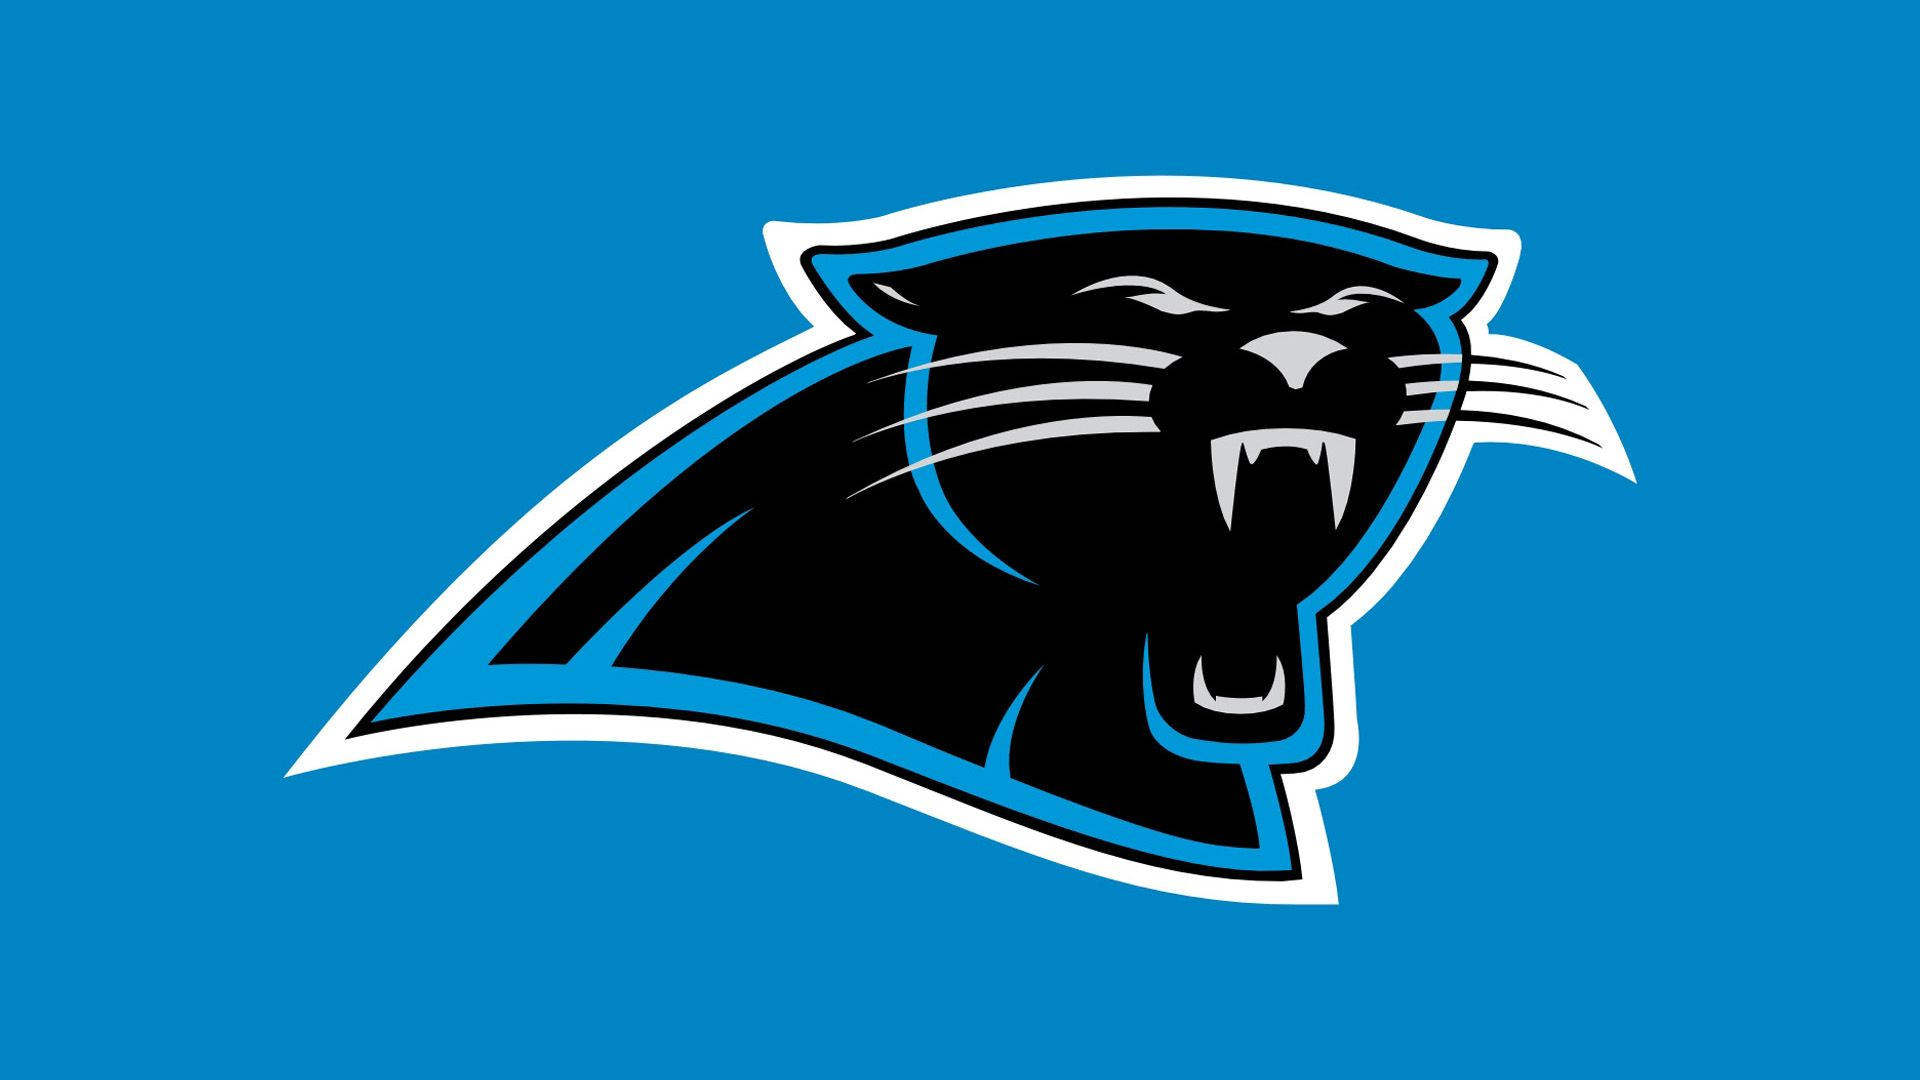 Simple Carolina Panthers Logo With Blue Surface Wallpaper